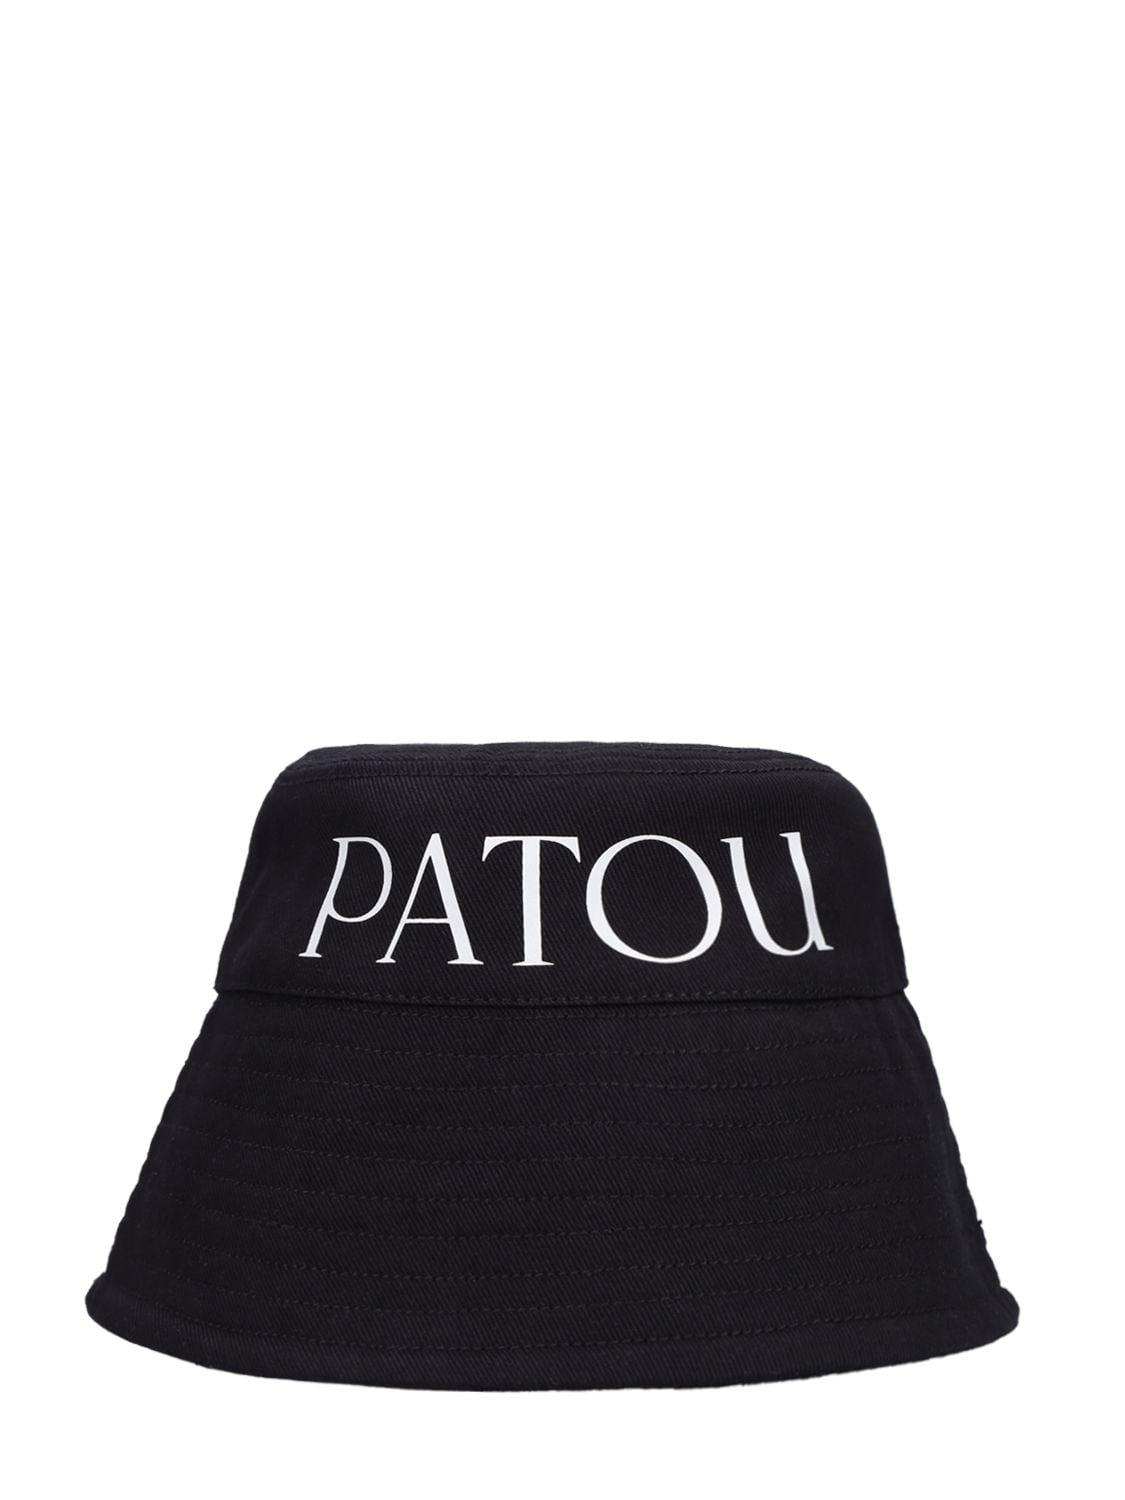 Patou Logo Bucket Hat In Black